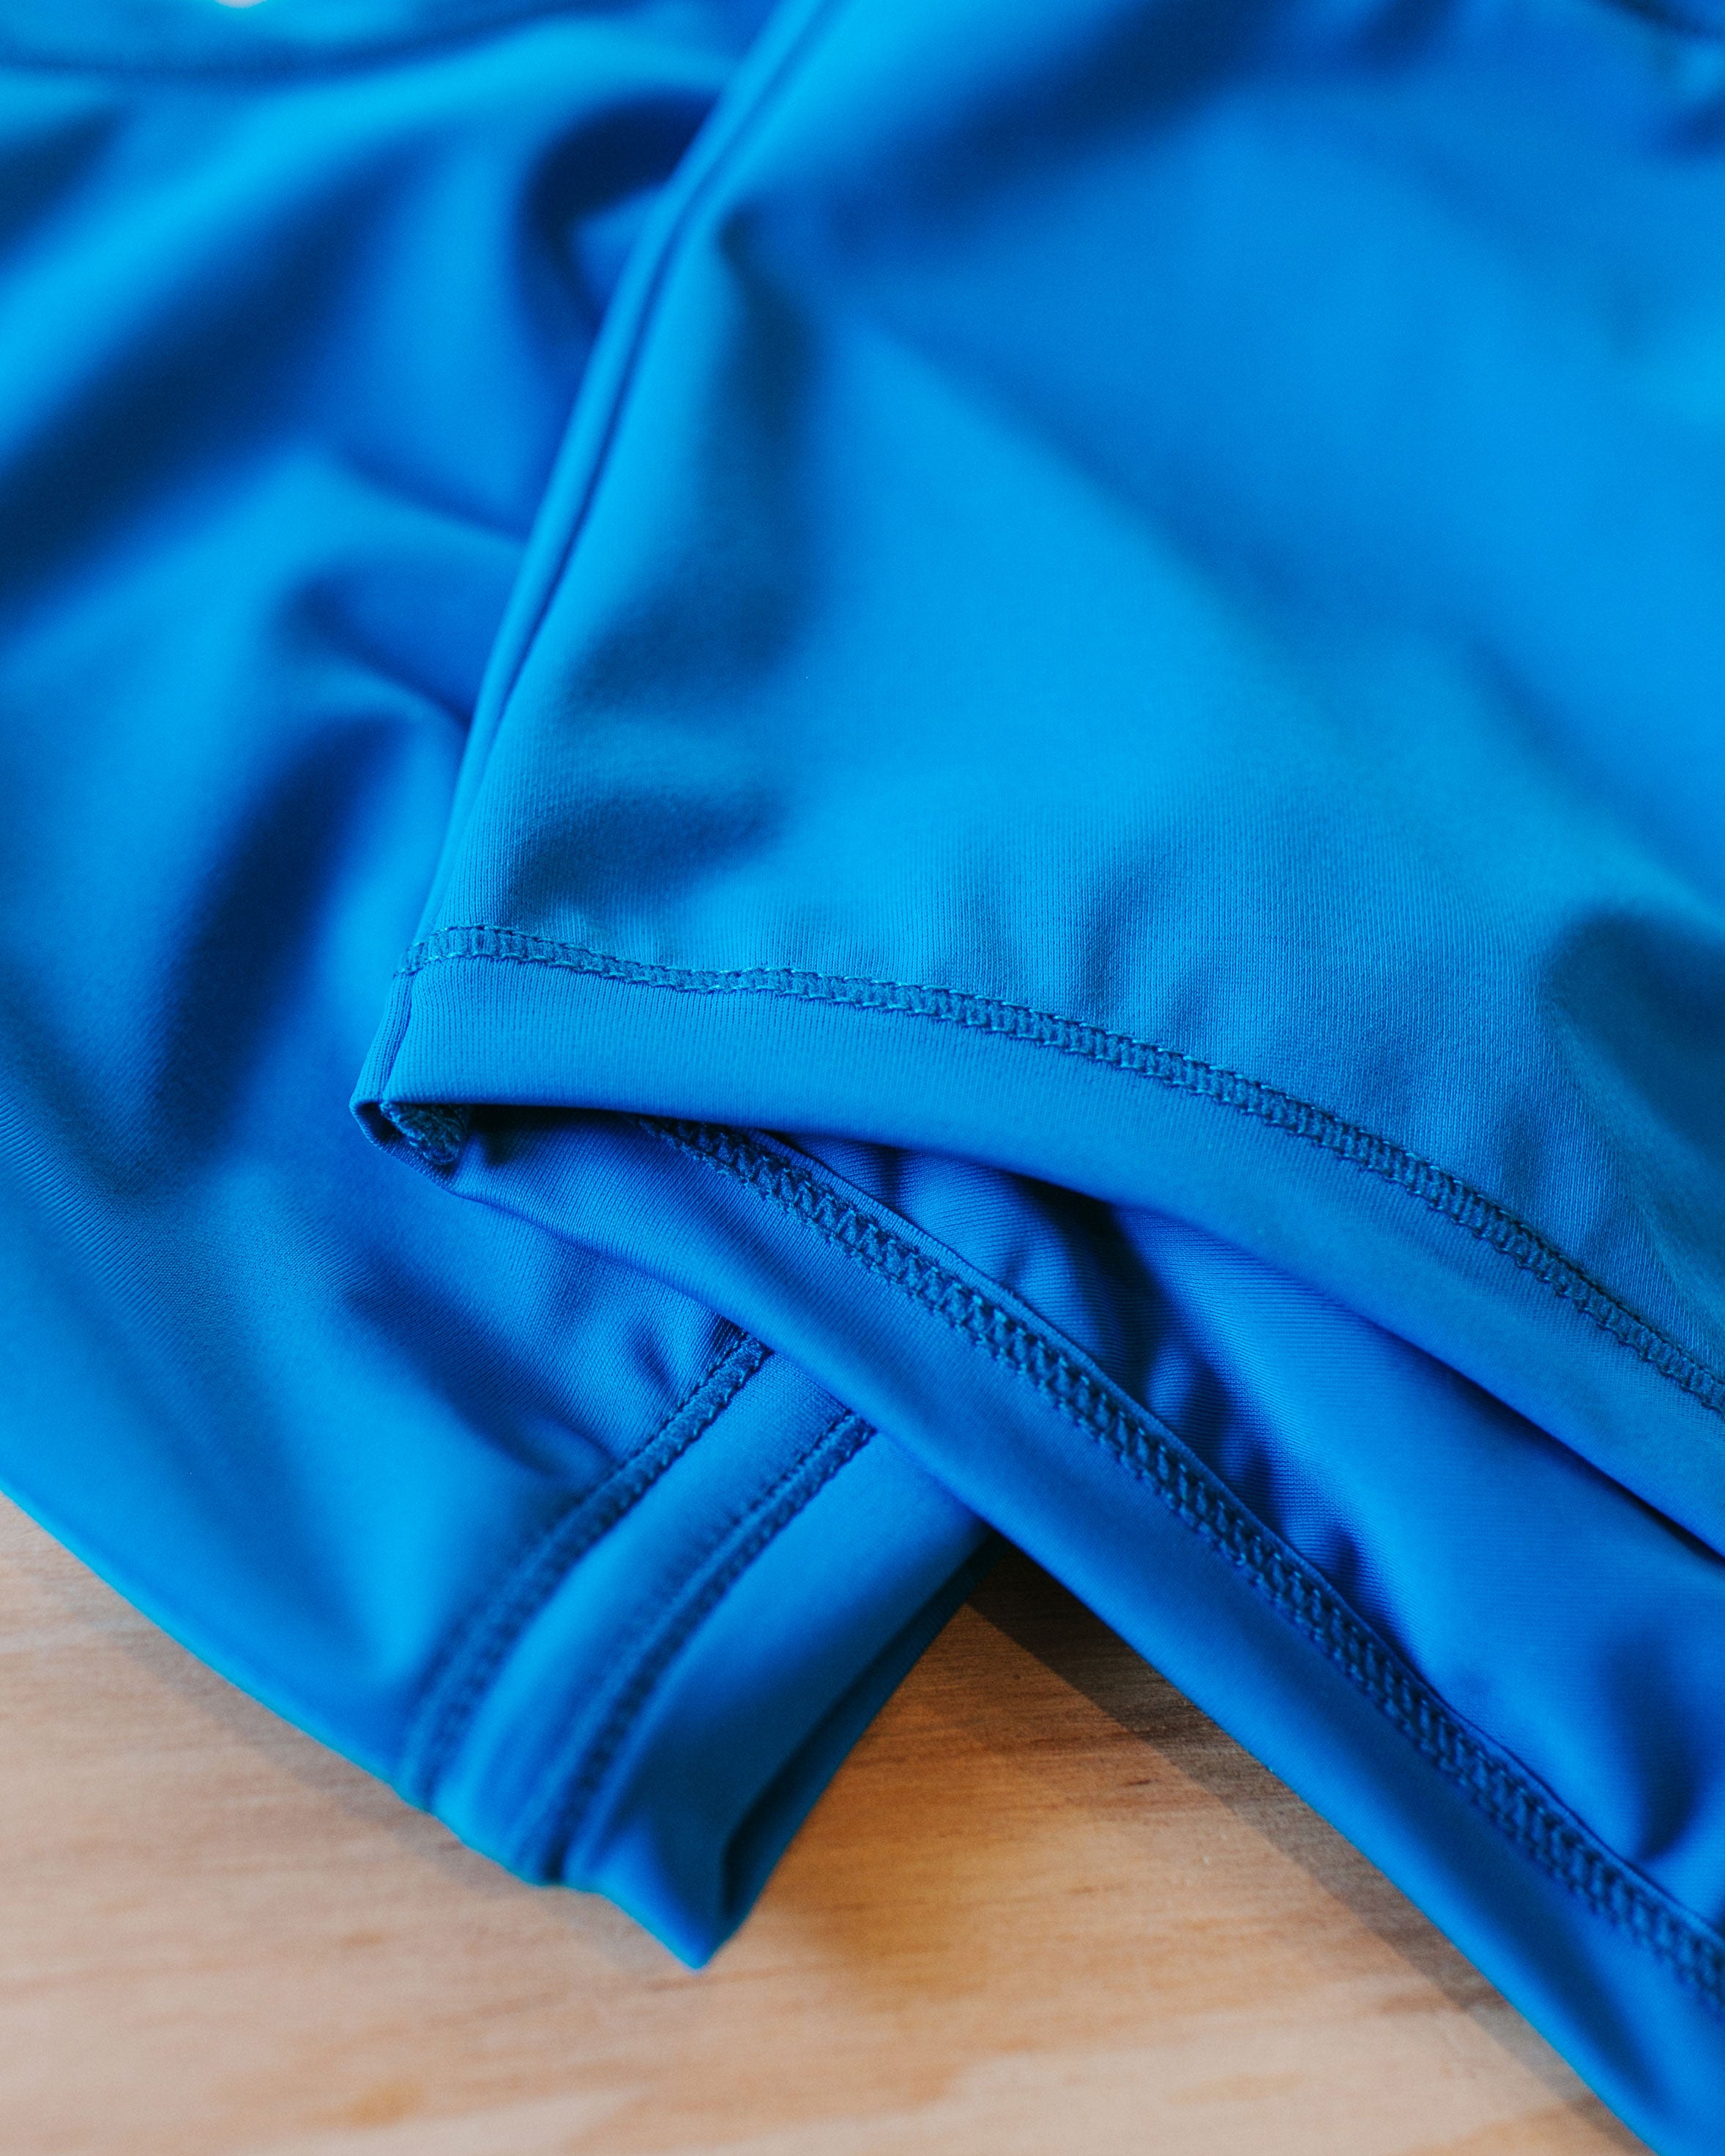 Close up of Marina Blue Swimwear, showing stitching and detail.